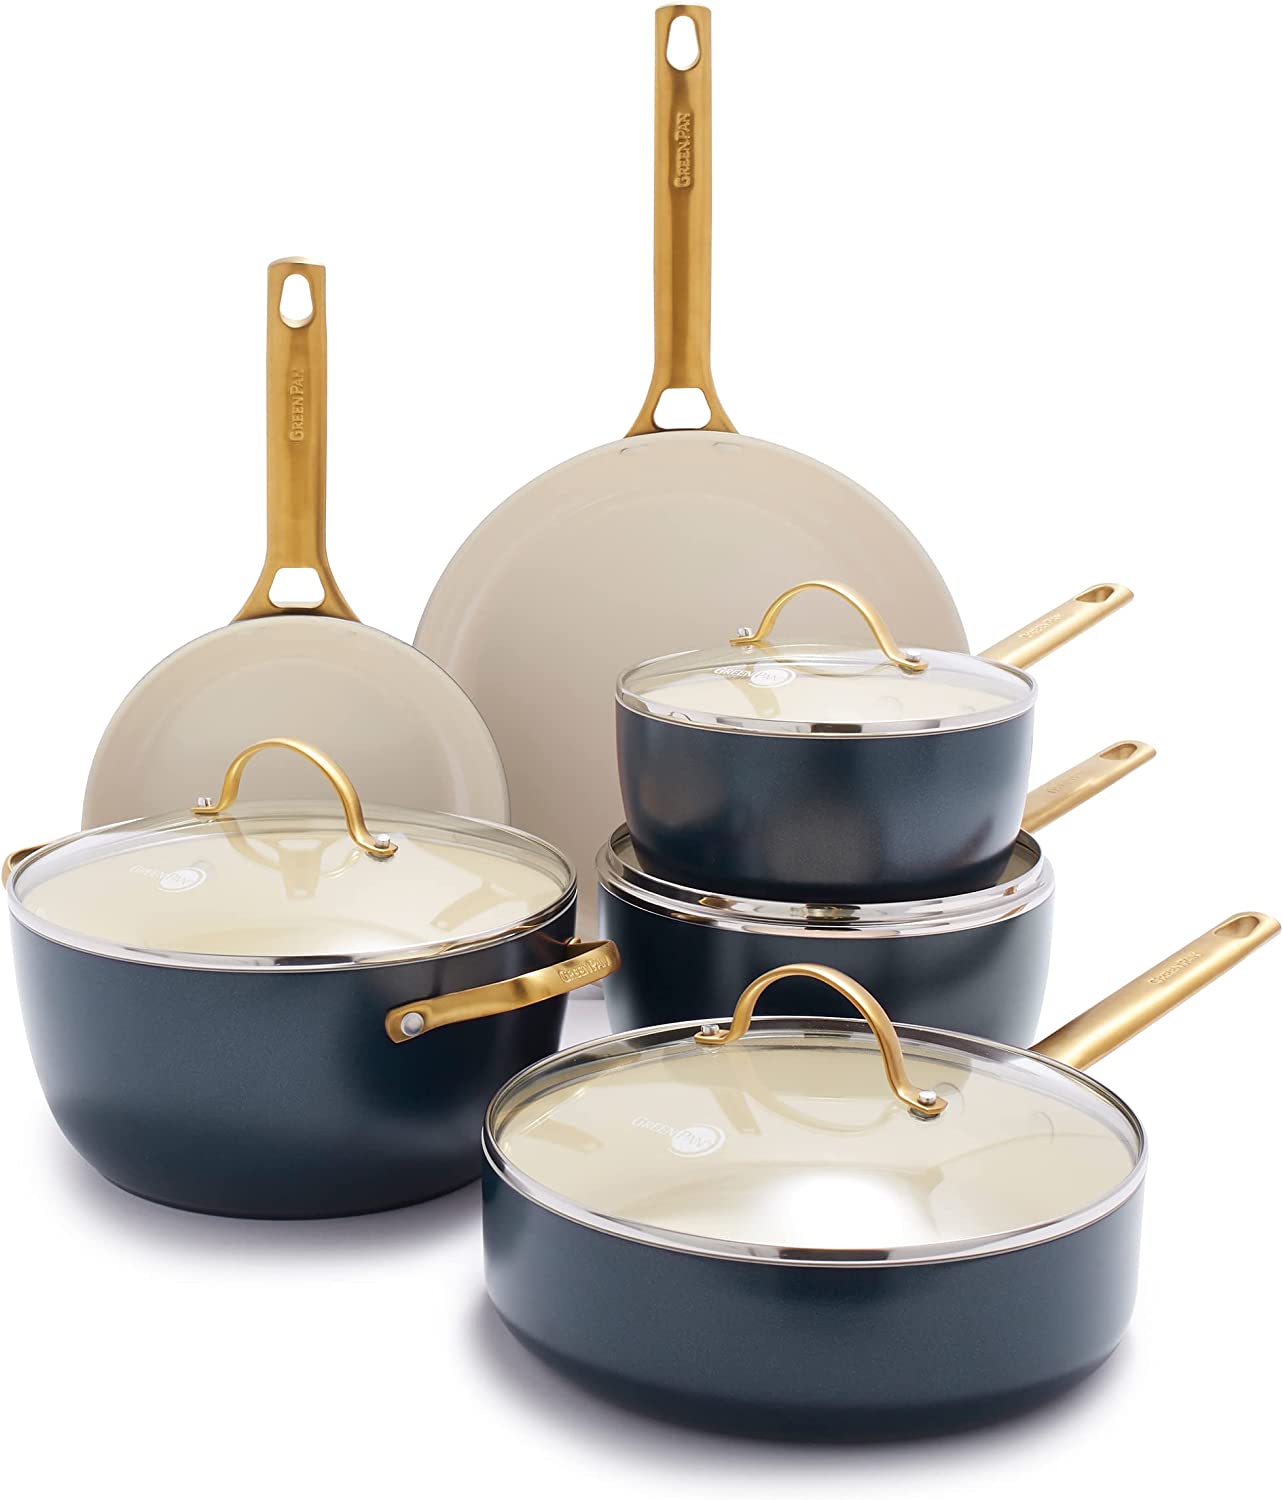 GreenPan Ceramic Nonstick 10 Piece Cookware Pots and Pans Set